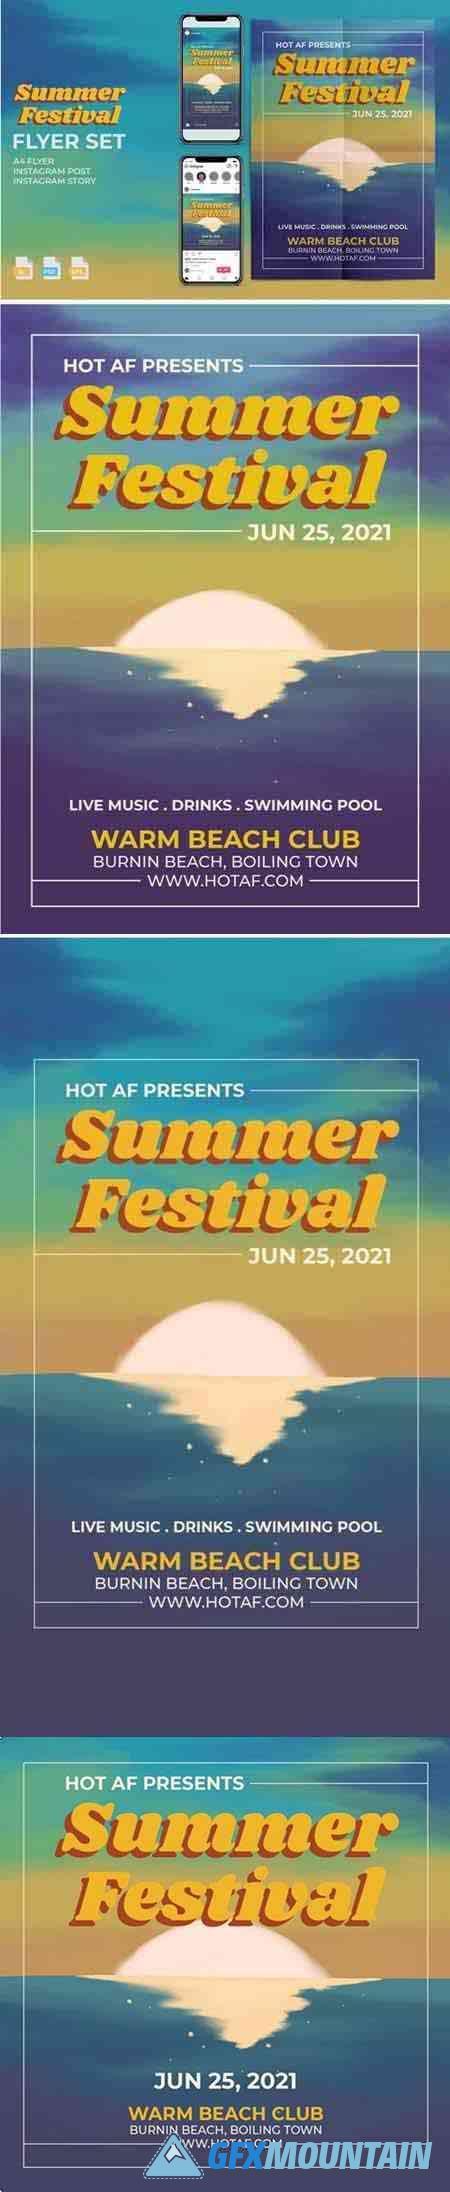 Summer Festival Flyer Set - Print and Social Media